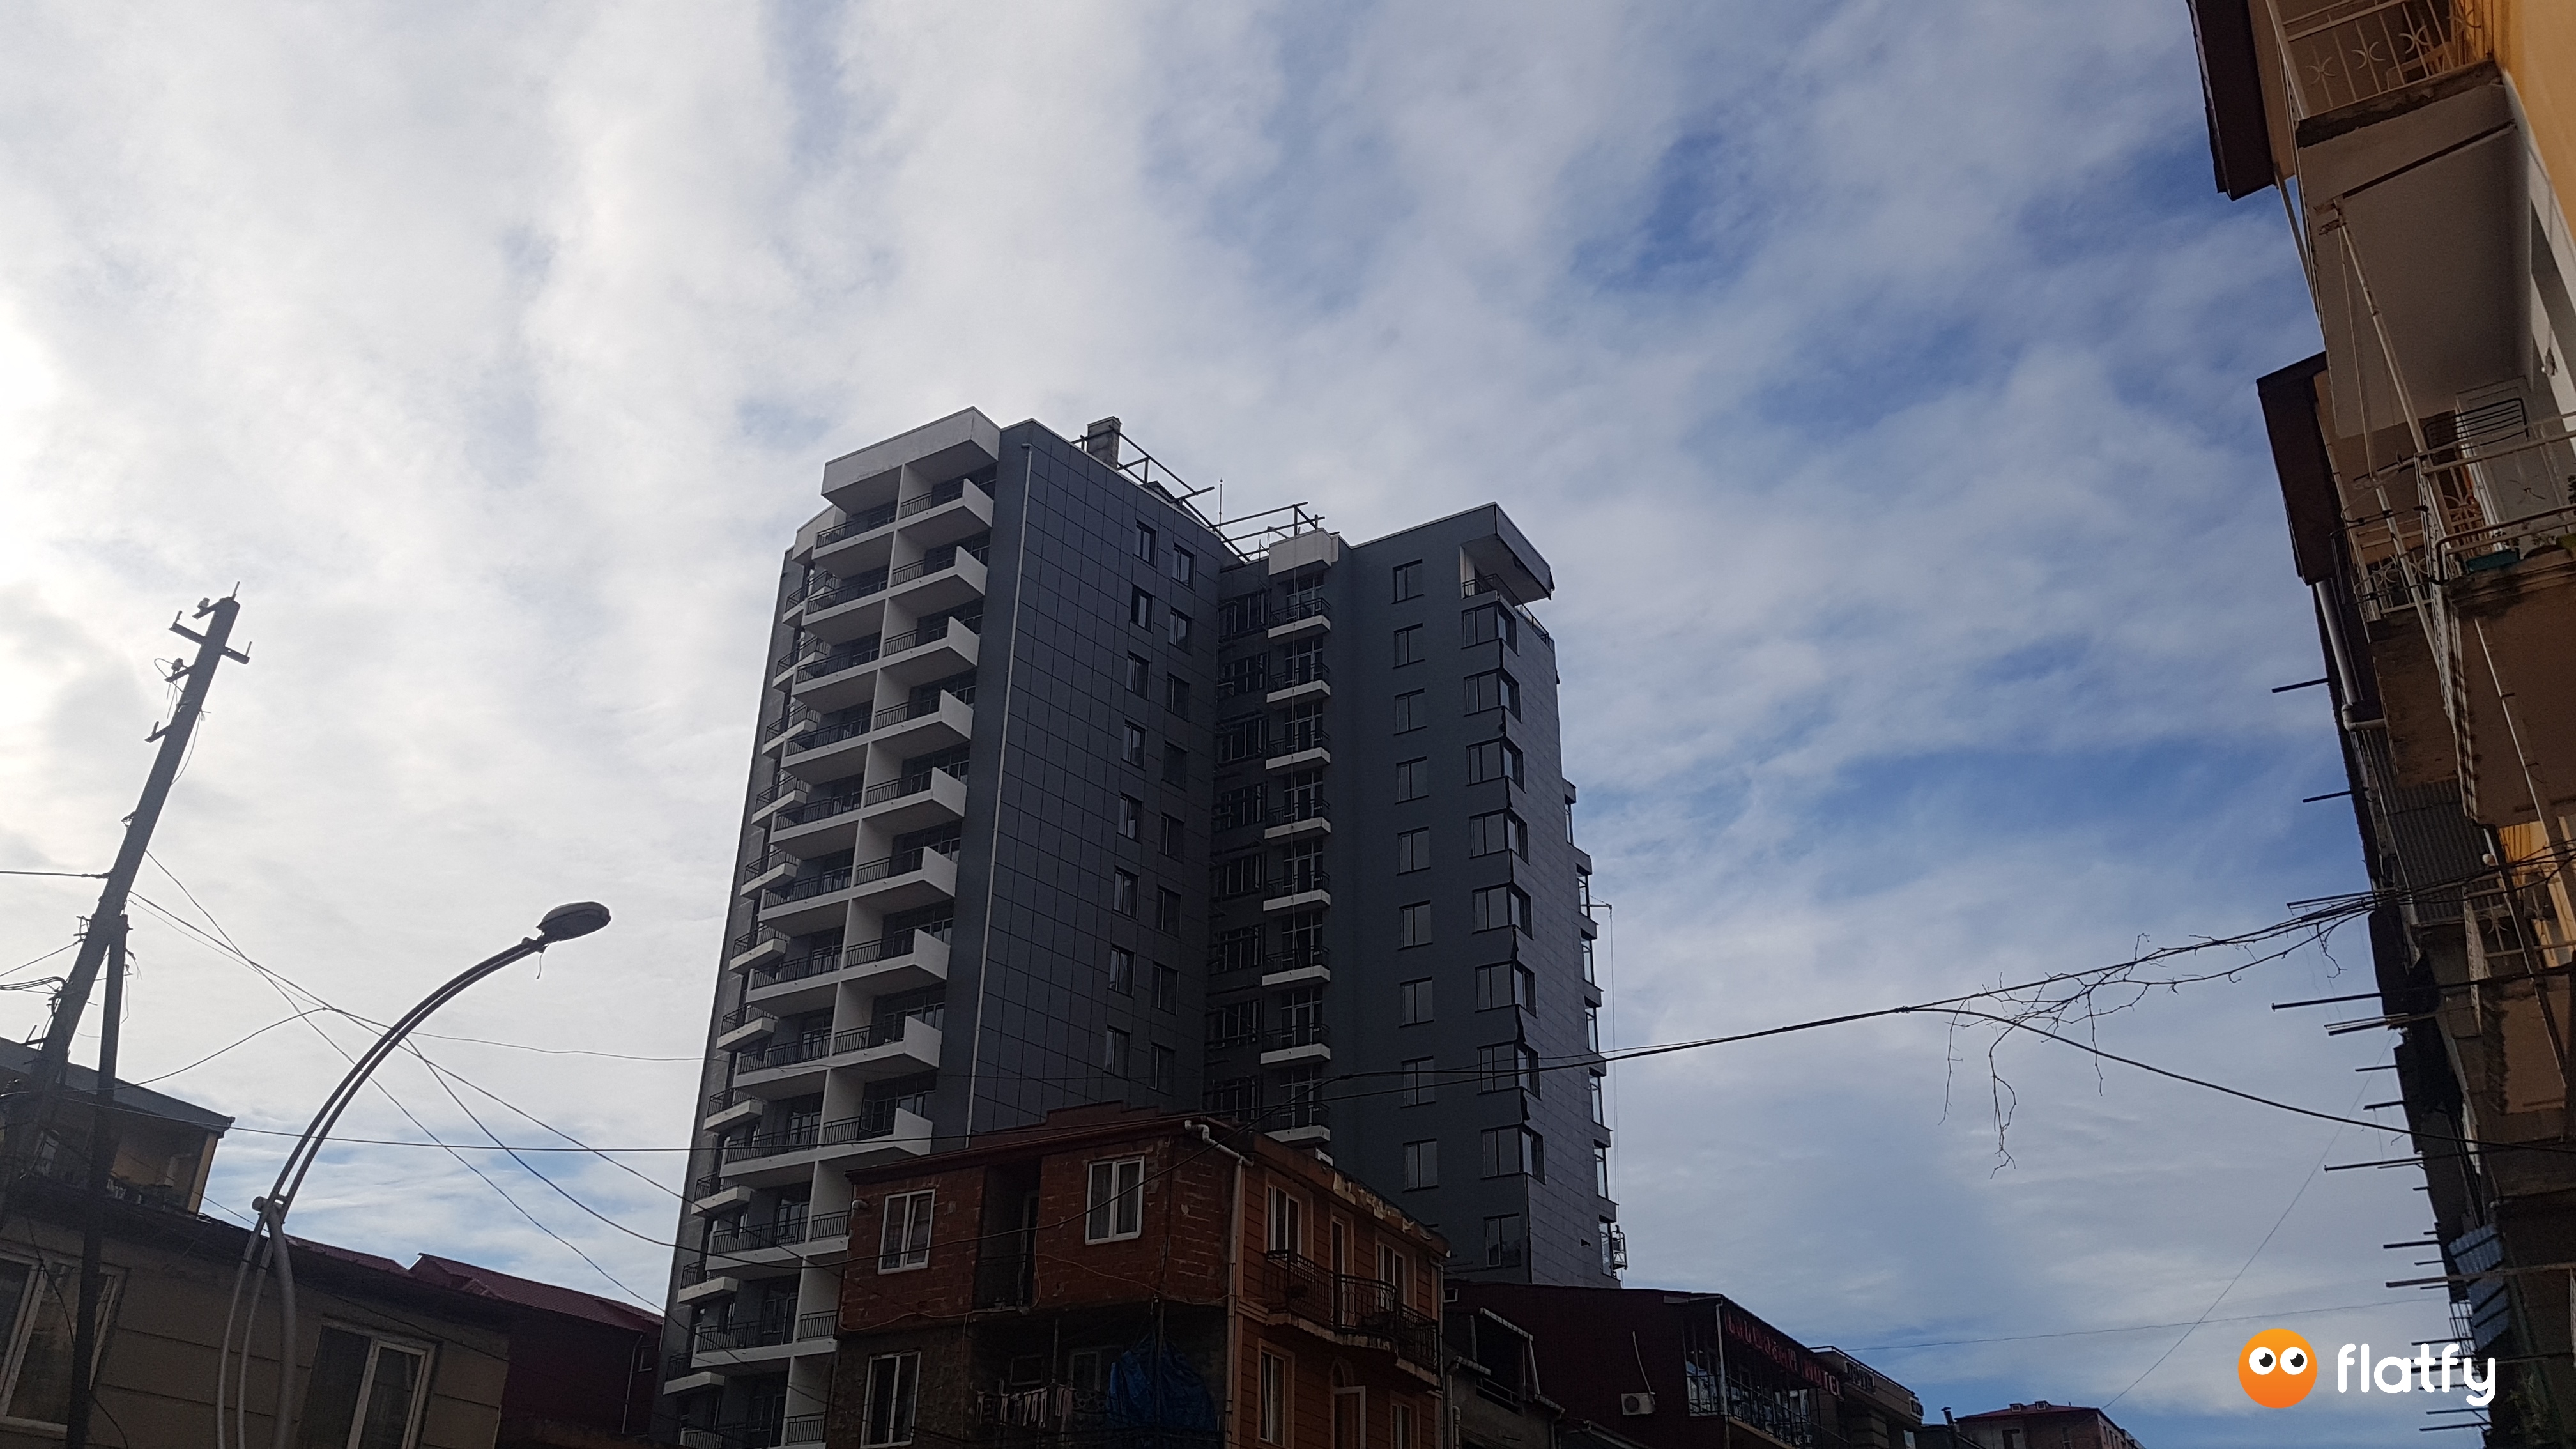 Construction progress Gumbati on Gorgiladze - Angle 4, April 2019